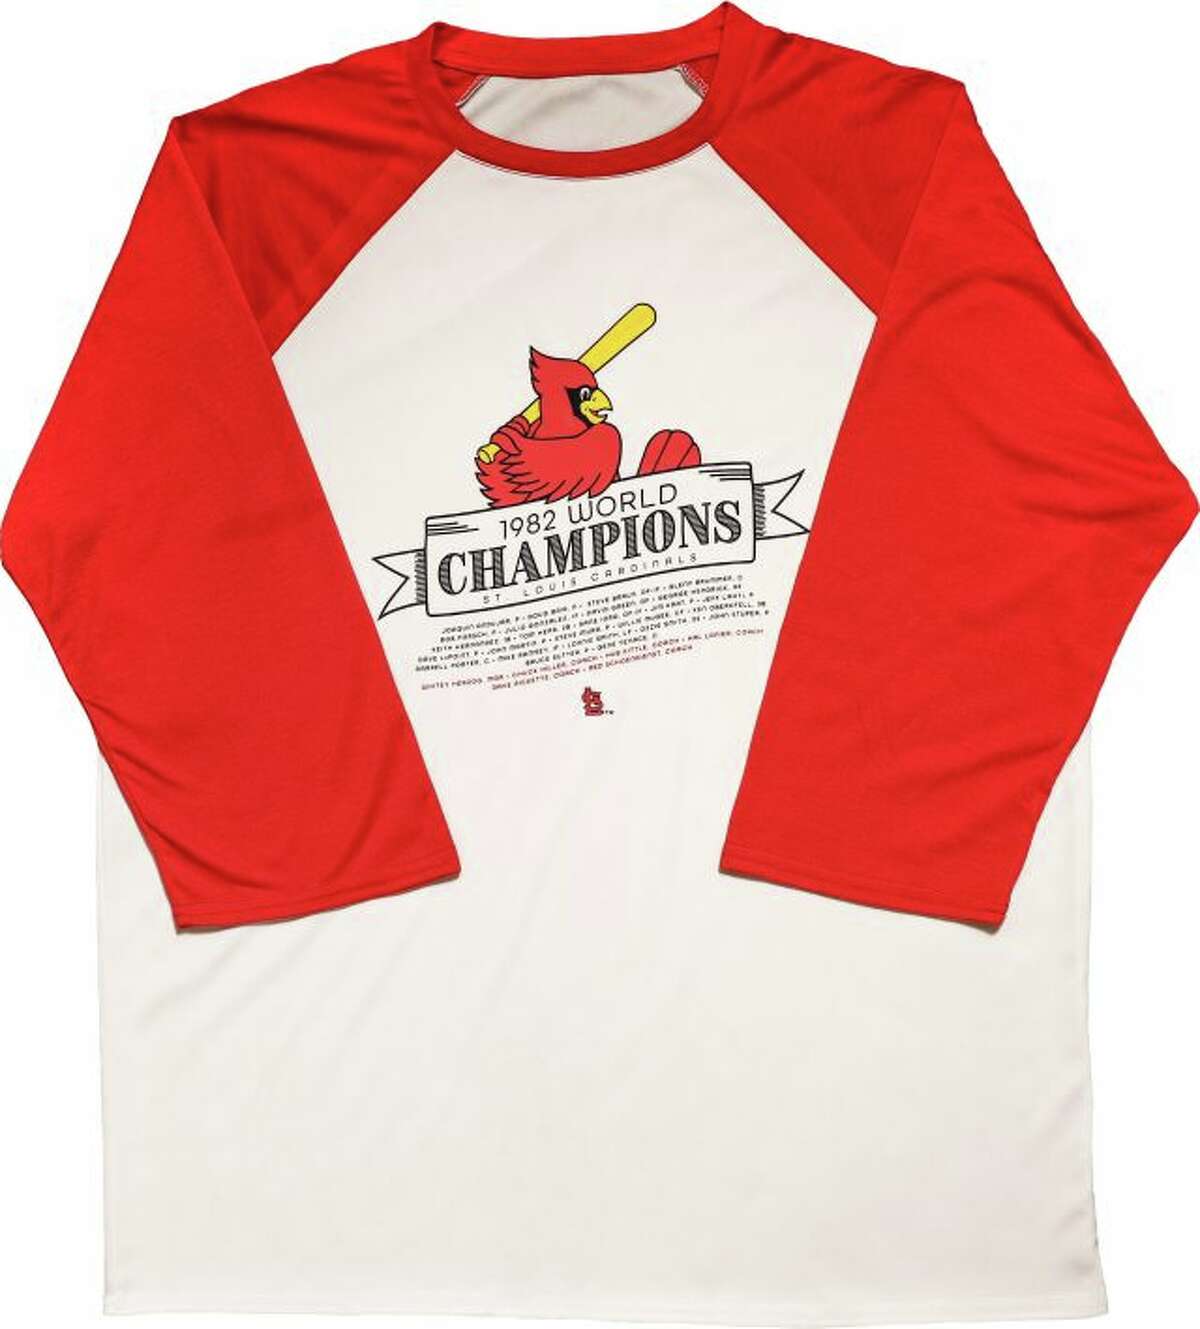 1982 st louis cardinals jersey